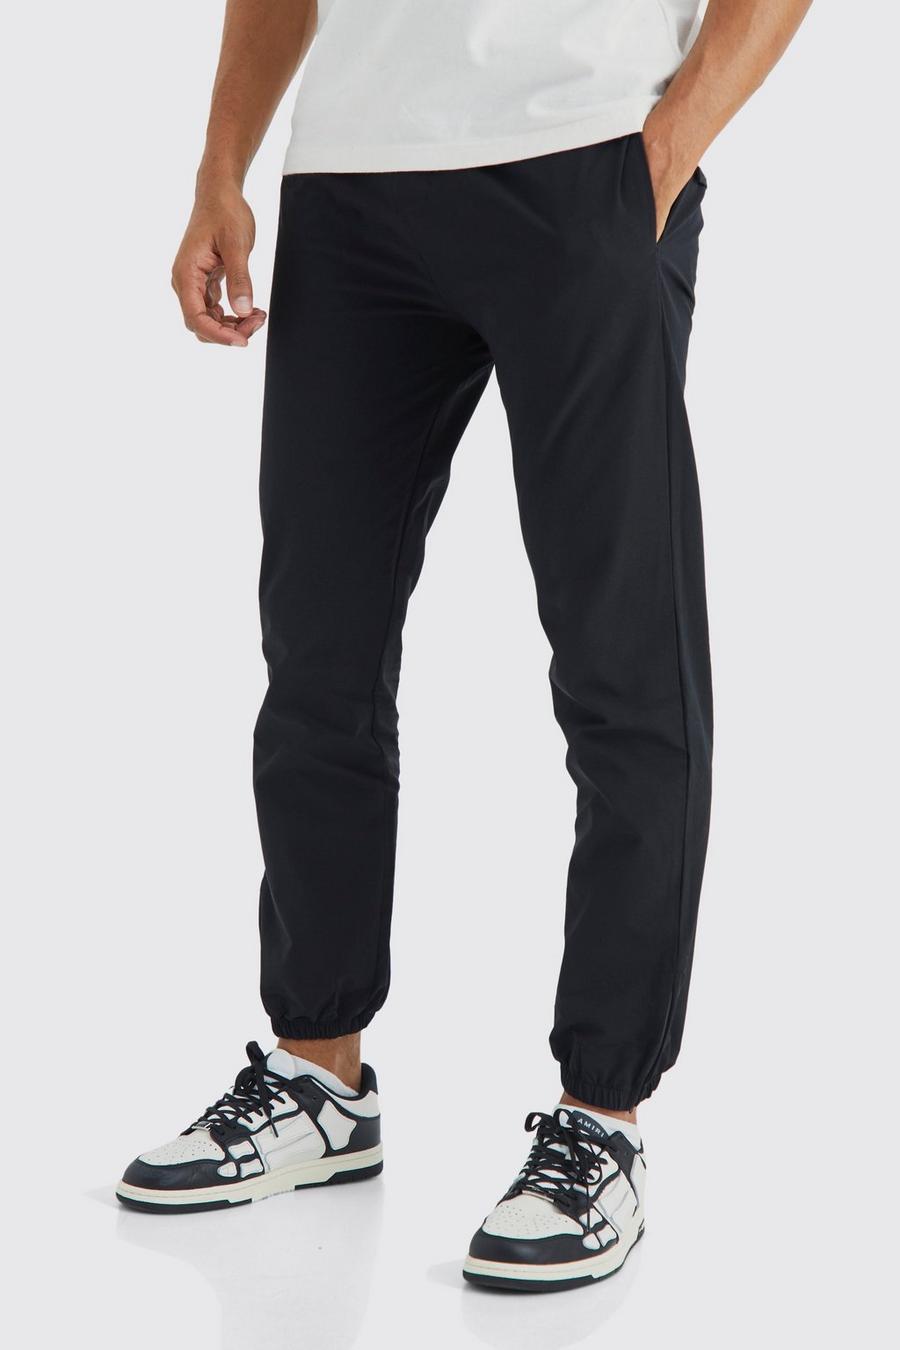 Pantaloni Slim Fit in Stretch tecnico, Black negro